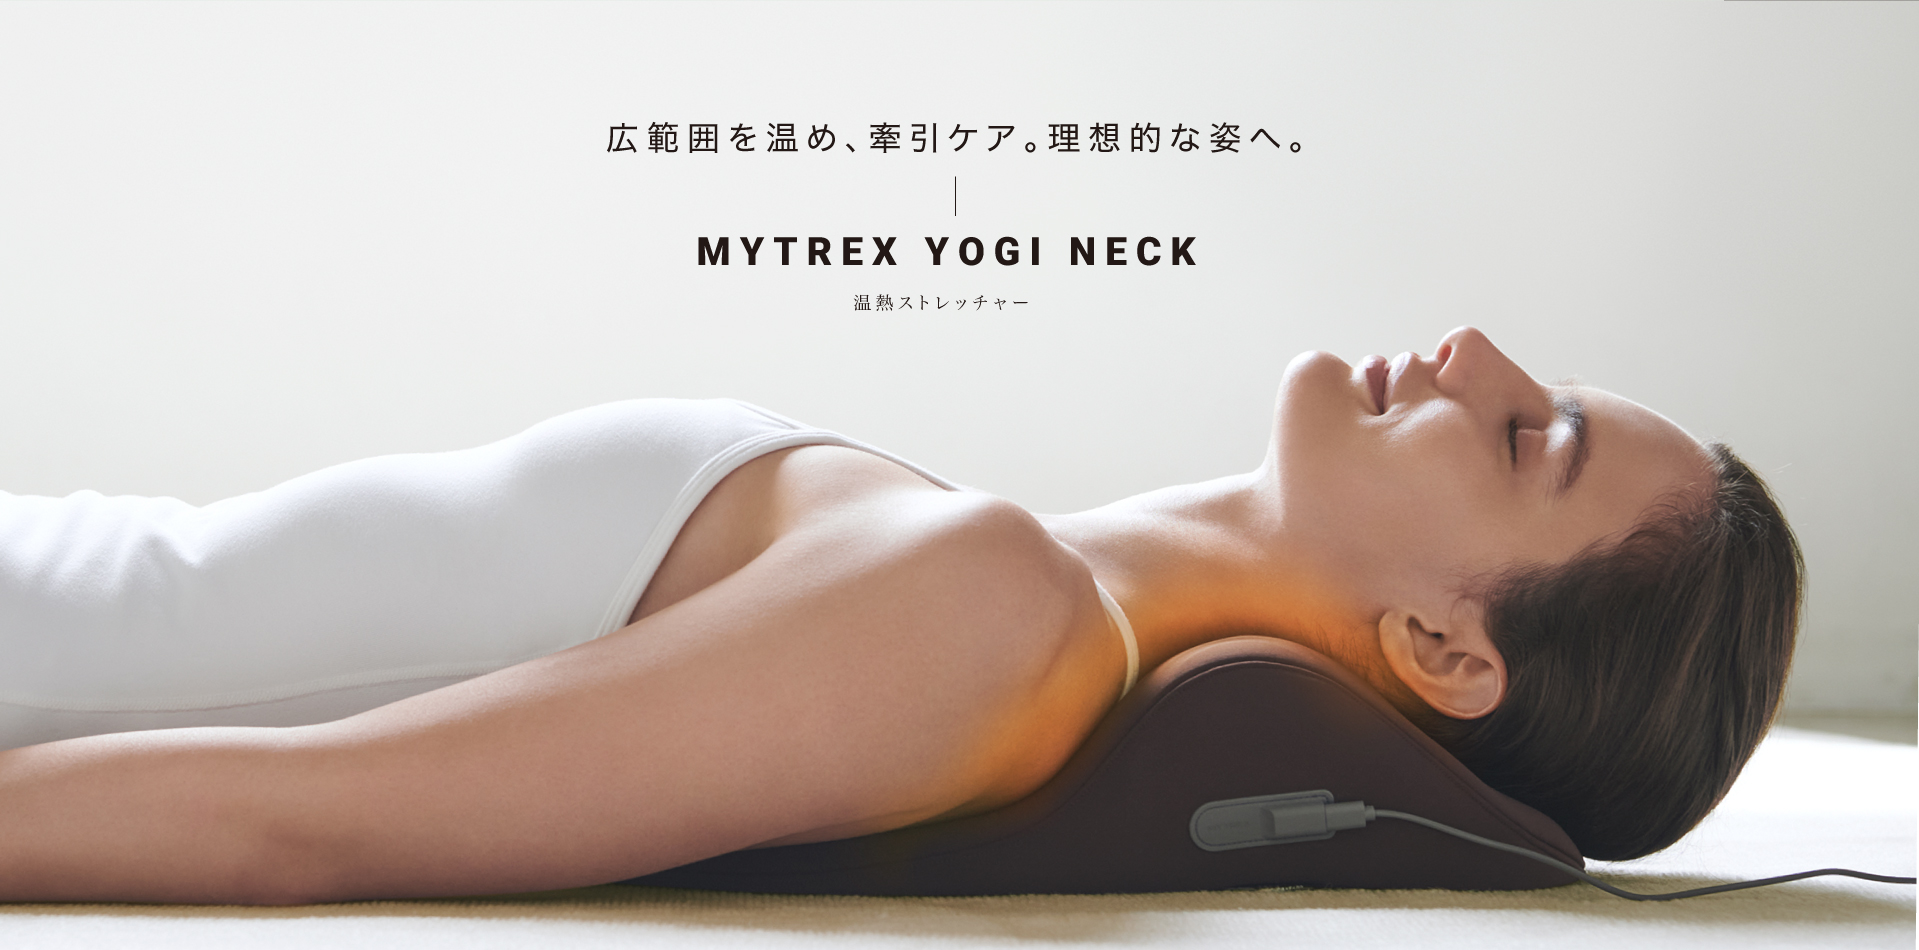 MYTREX YOGI NECK マイトレックス ヨギネック ヨギ ネック 温熱ストレッチャー 首 ヨガ マットレス 寝るだけ30分 新商品。